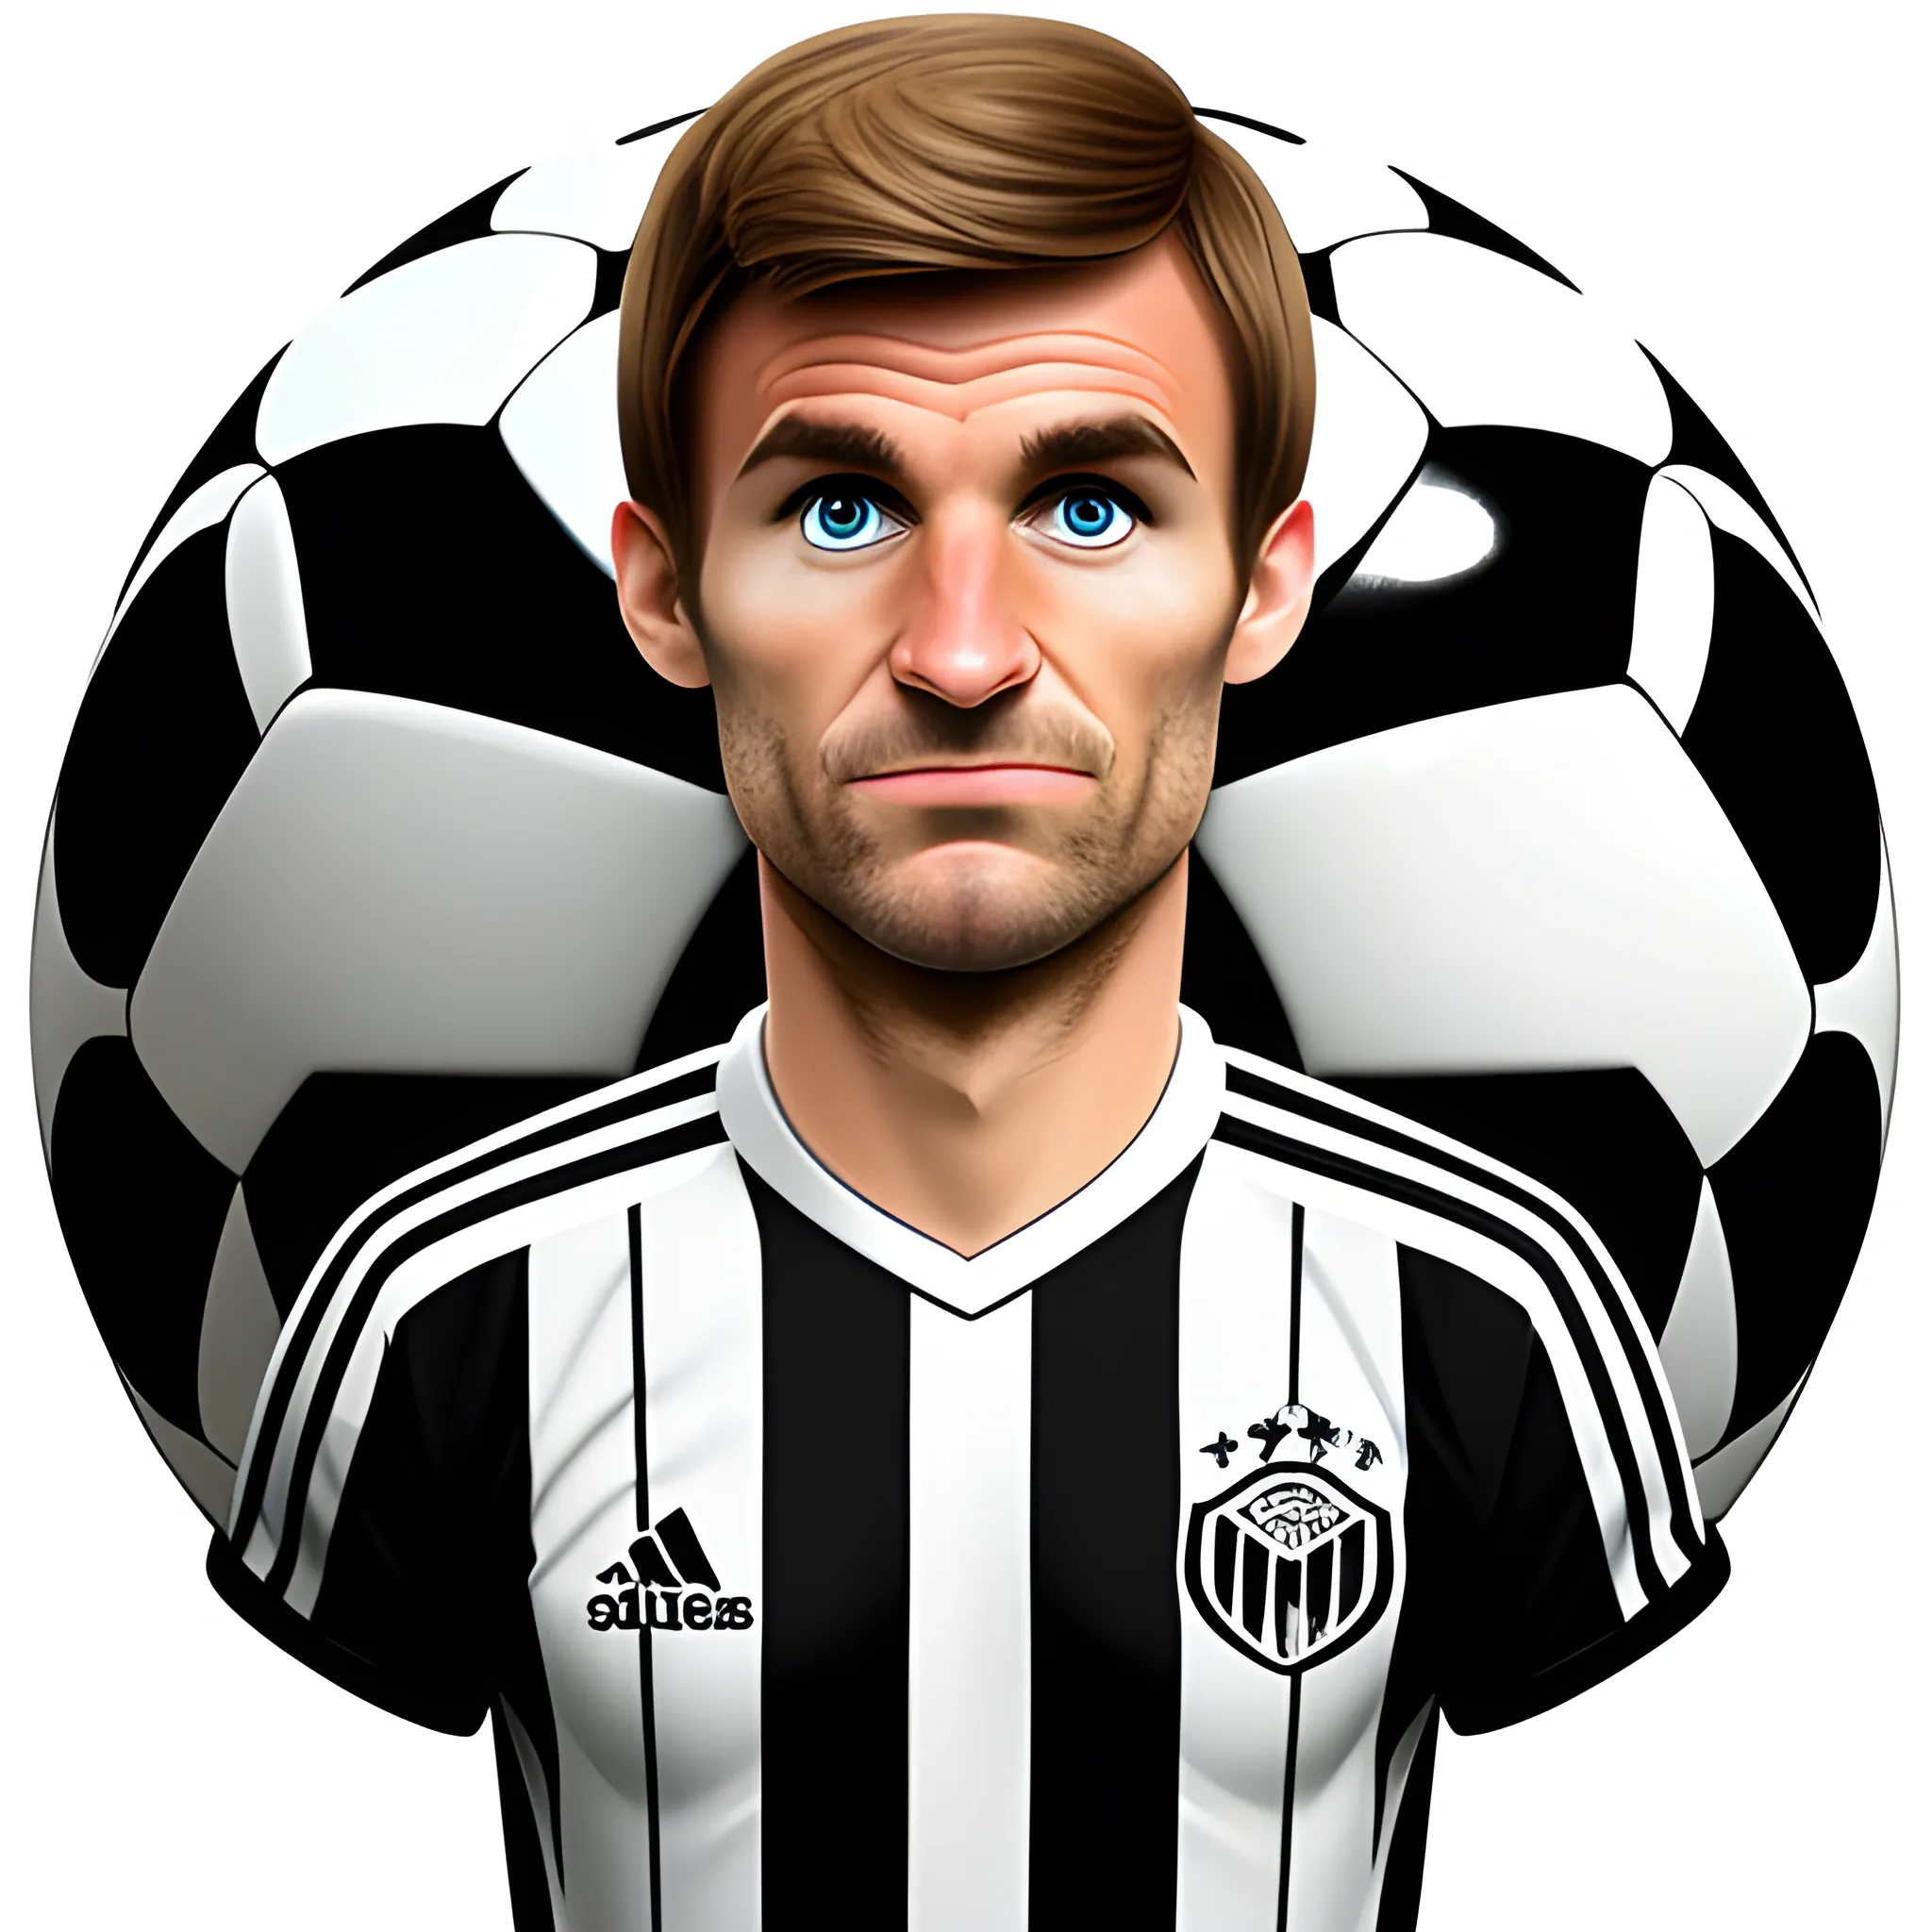 Character, soccer ballon, Tomas Müller face. Toon style